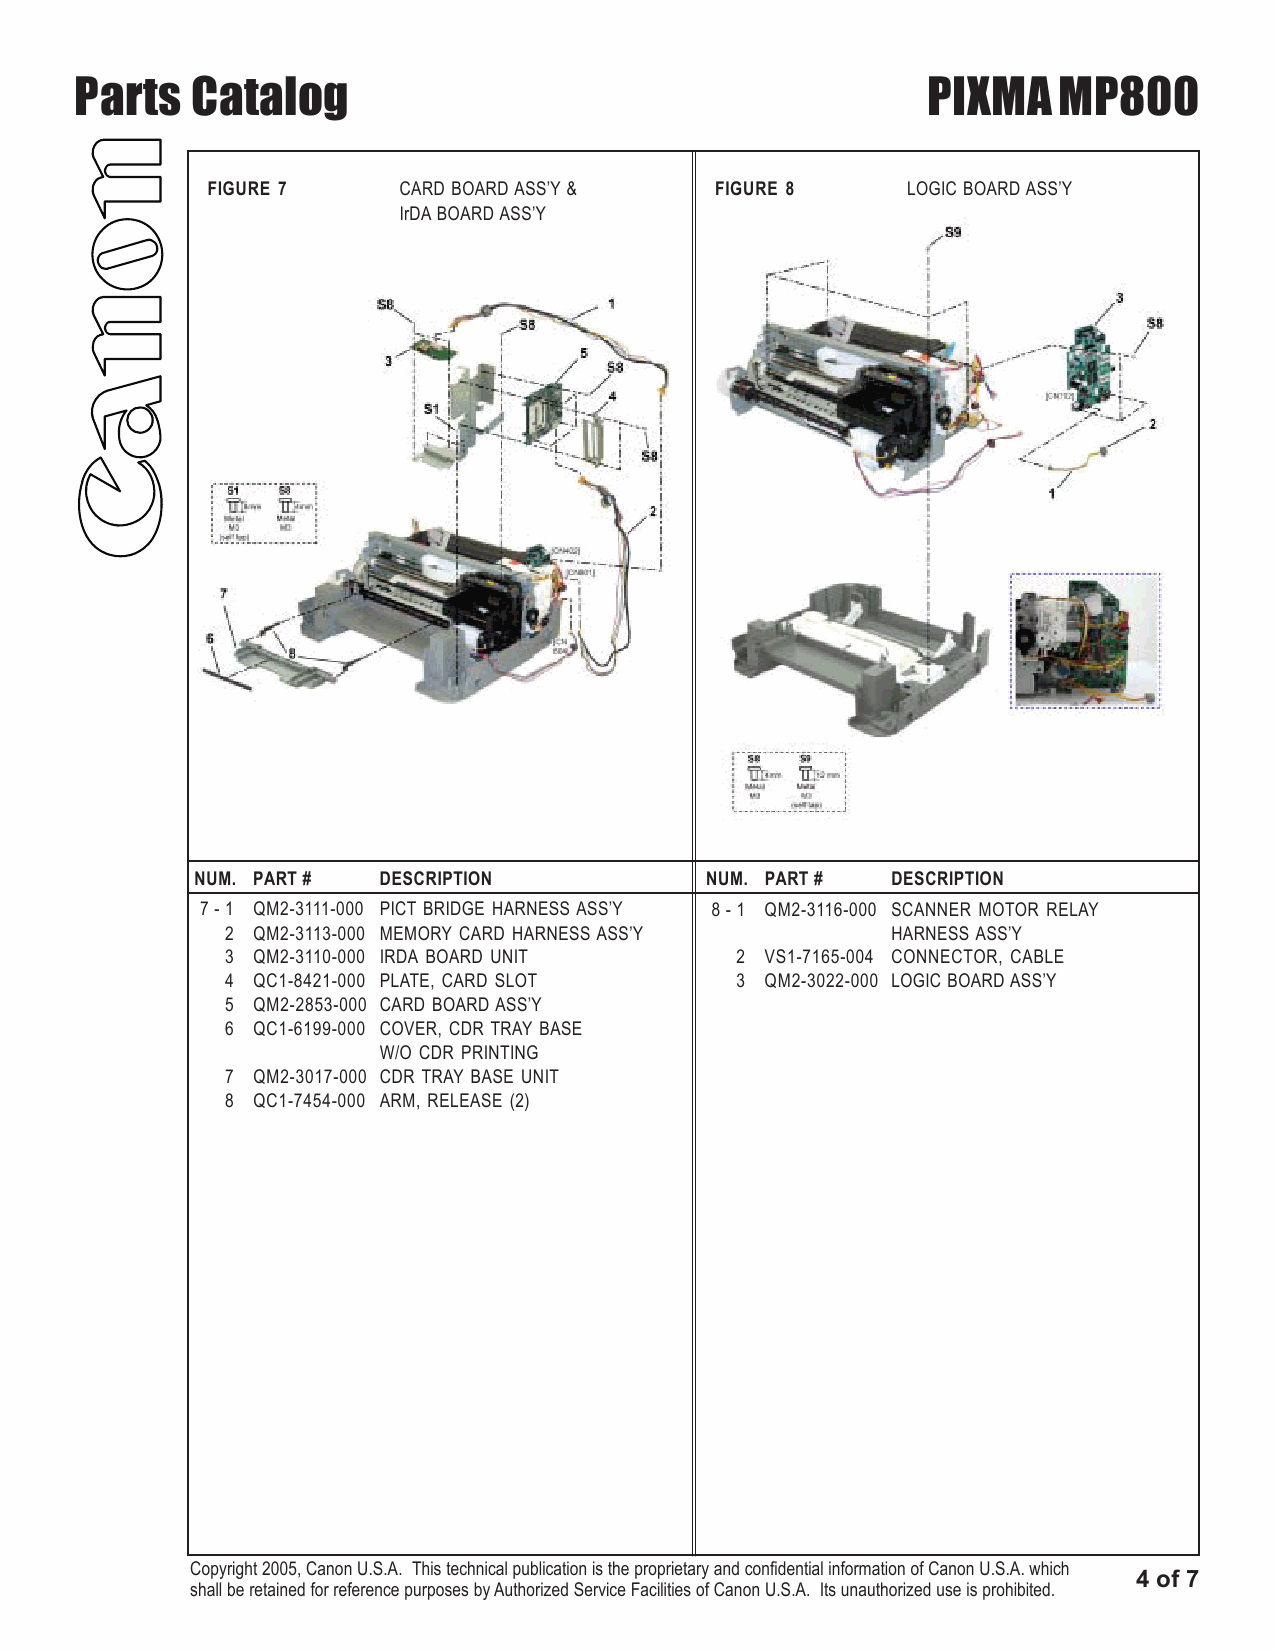 Canon PIXMA MP800 Parts Catalog Manual-5